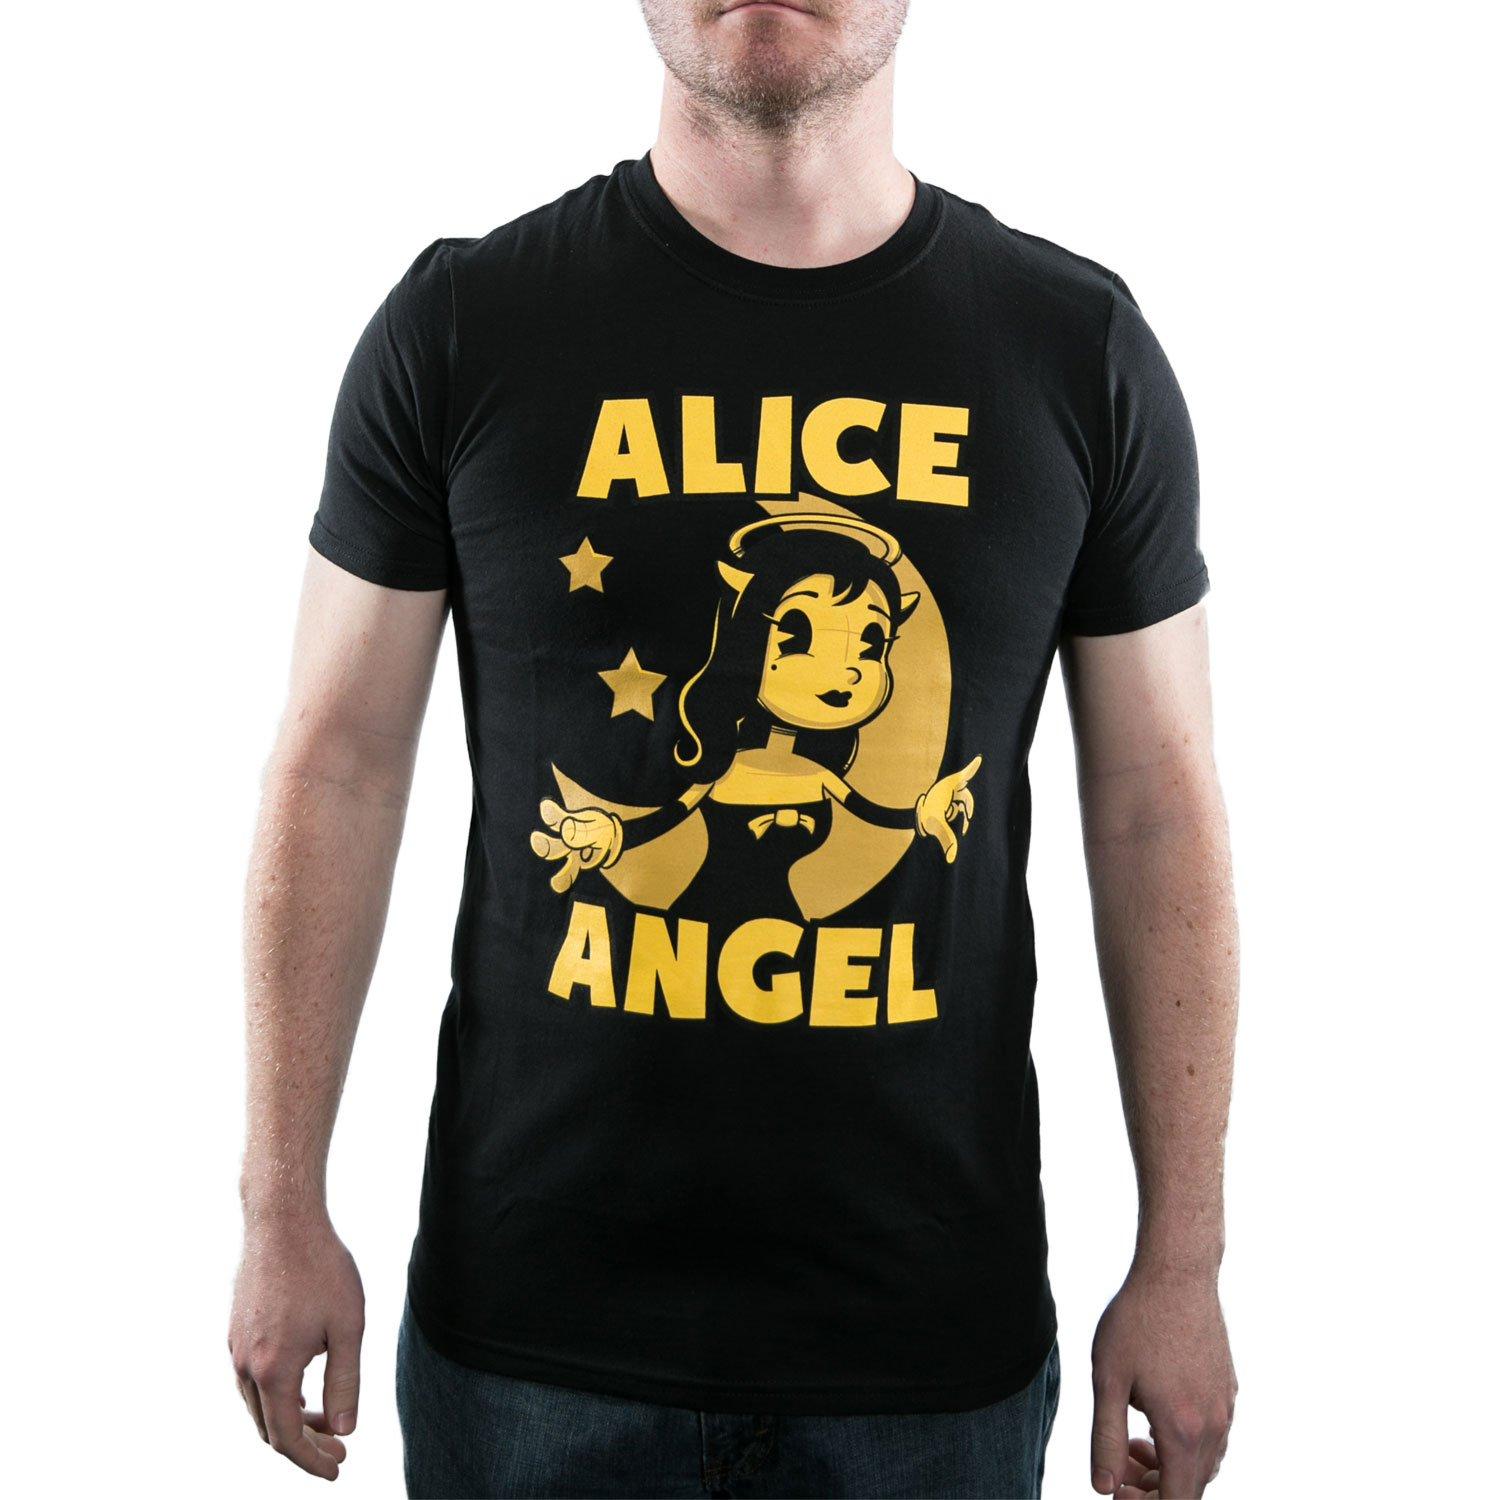 alice angel shirt